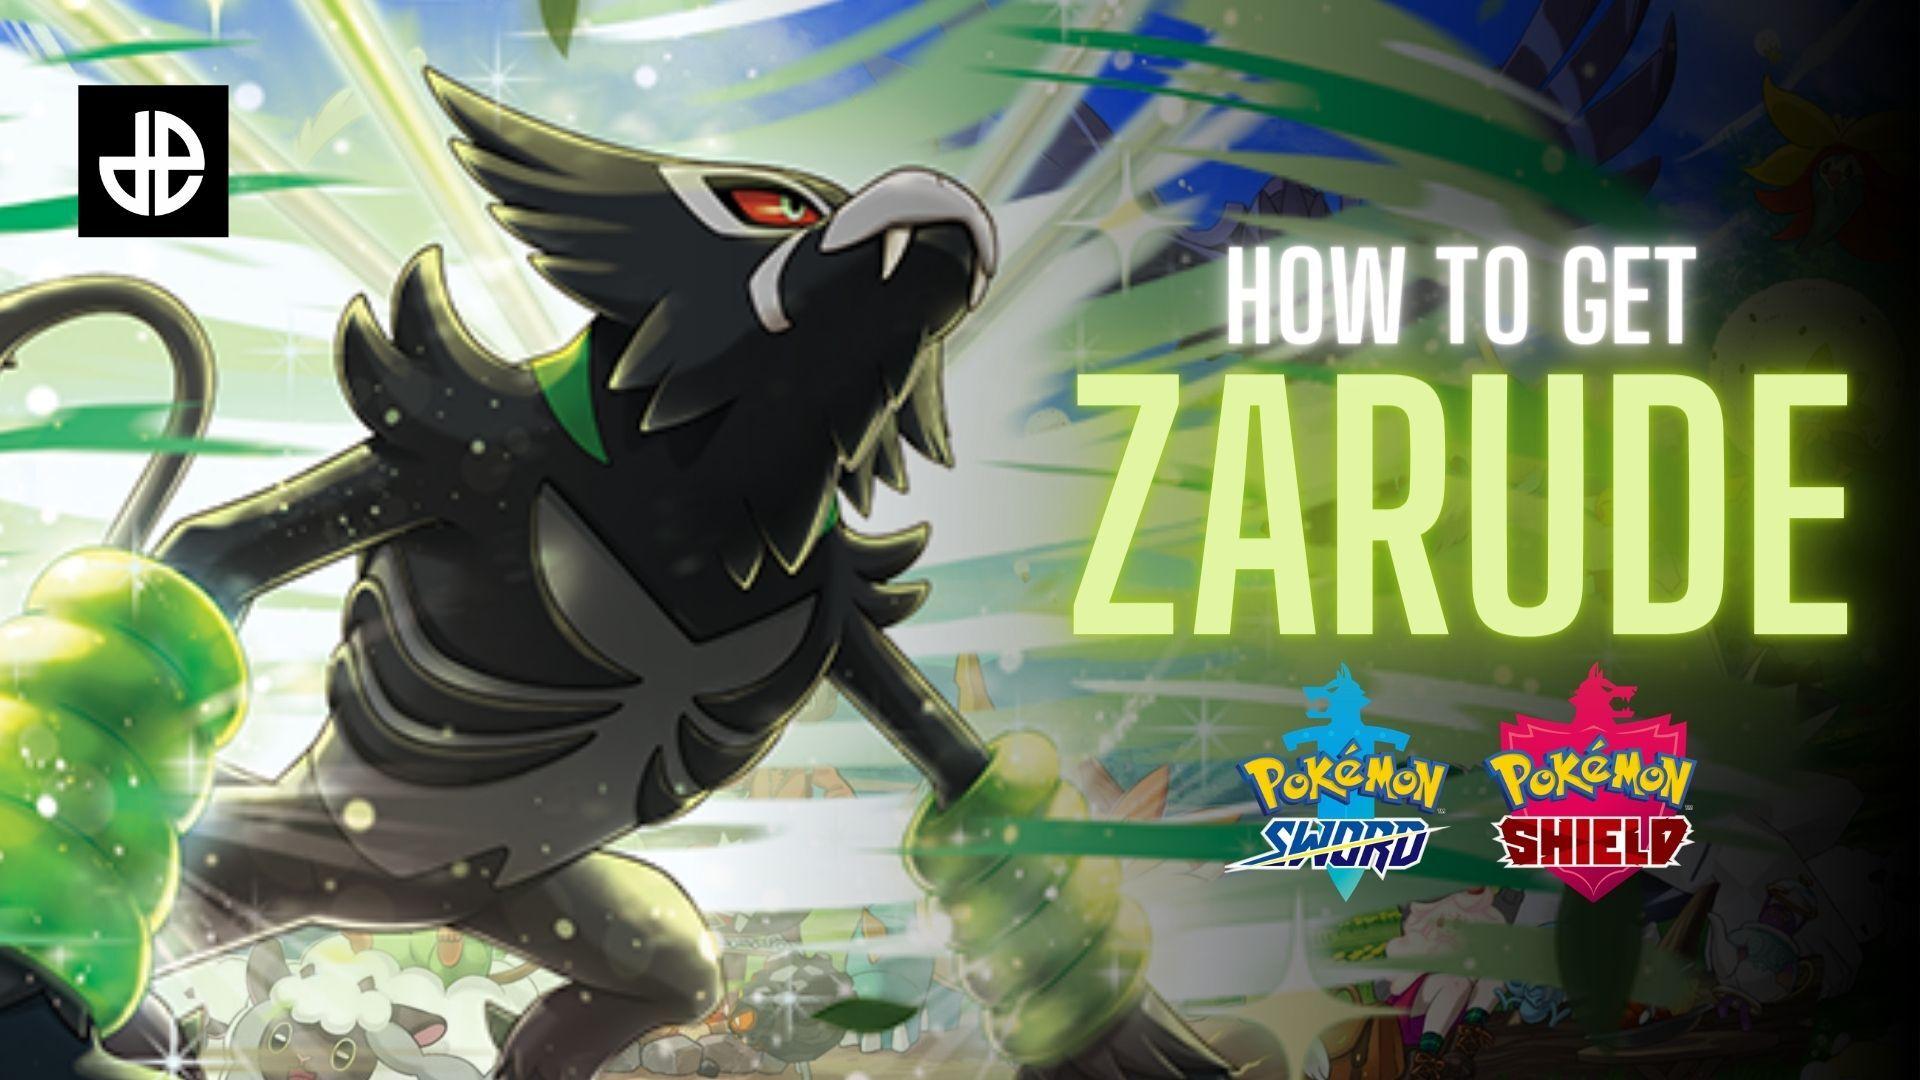 I still like Zarude though : r/pokemon